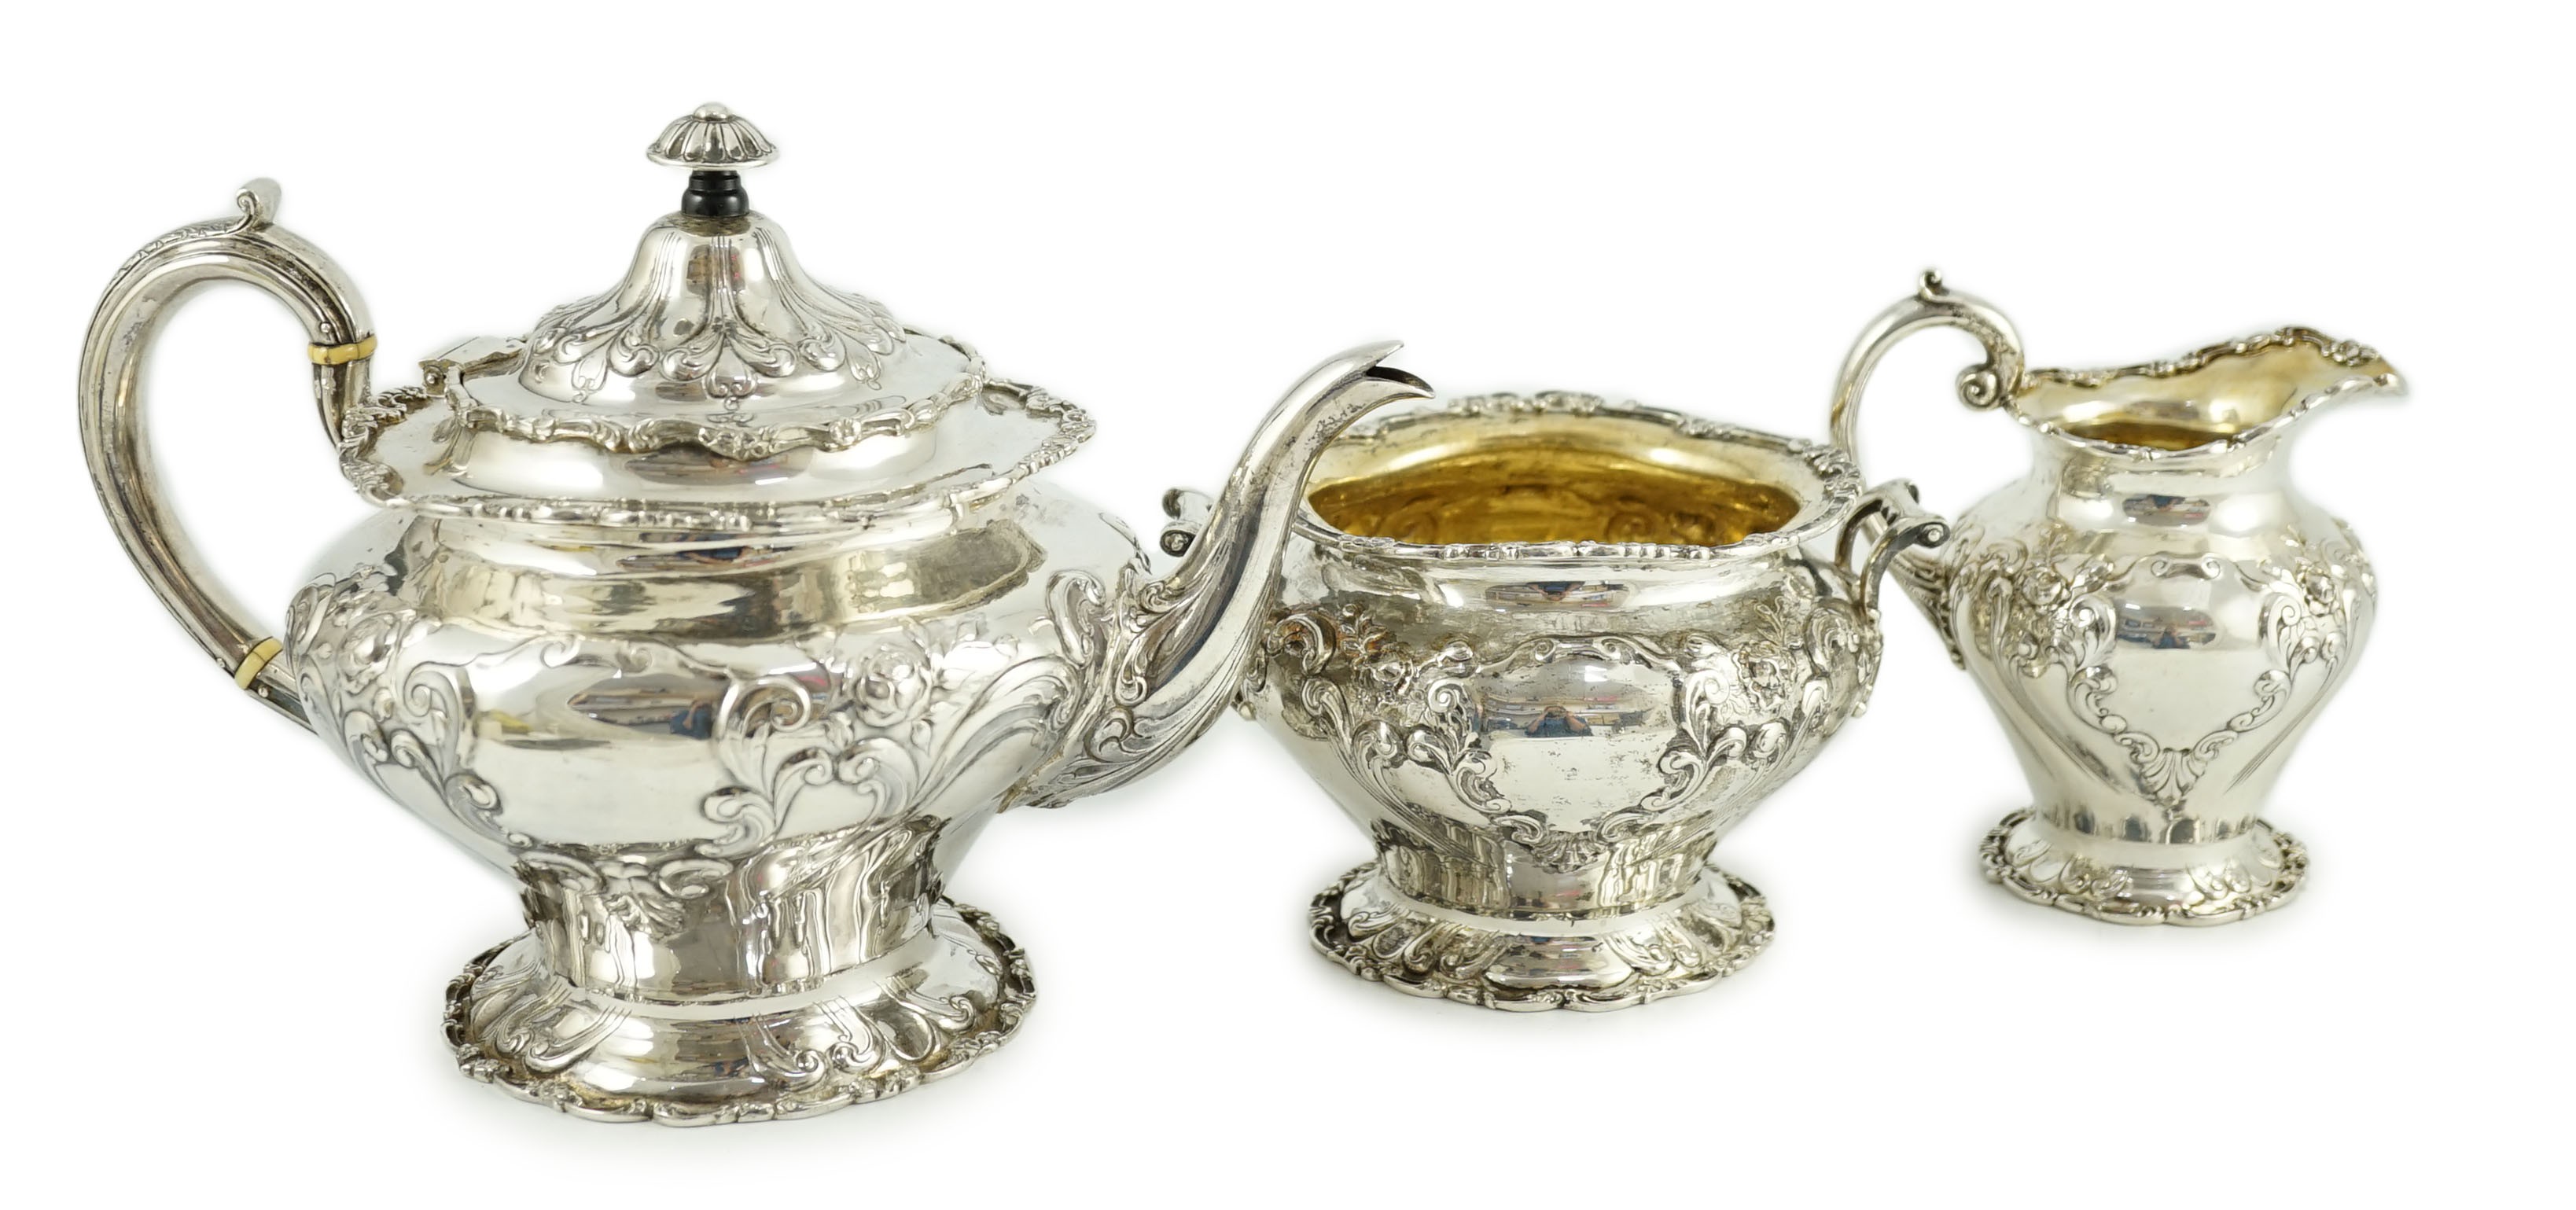 An Edwardian Scottish repousse silver three piece tea set, by Robert Scott